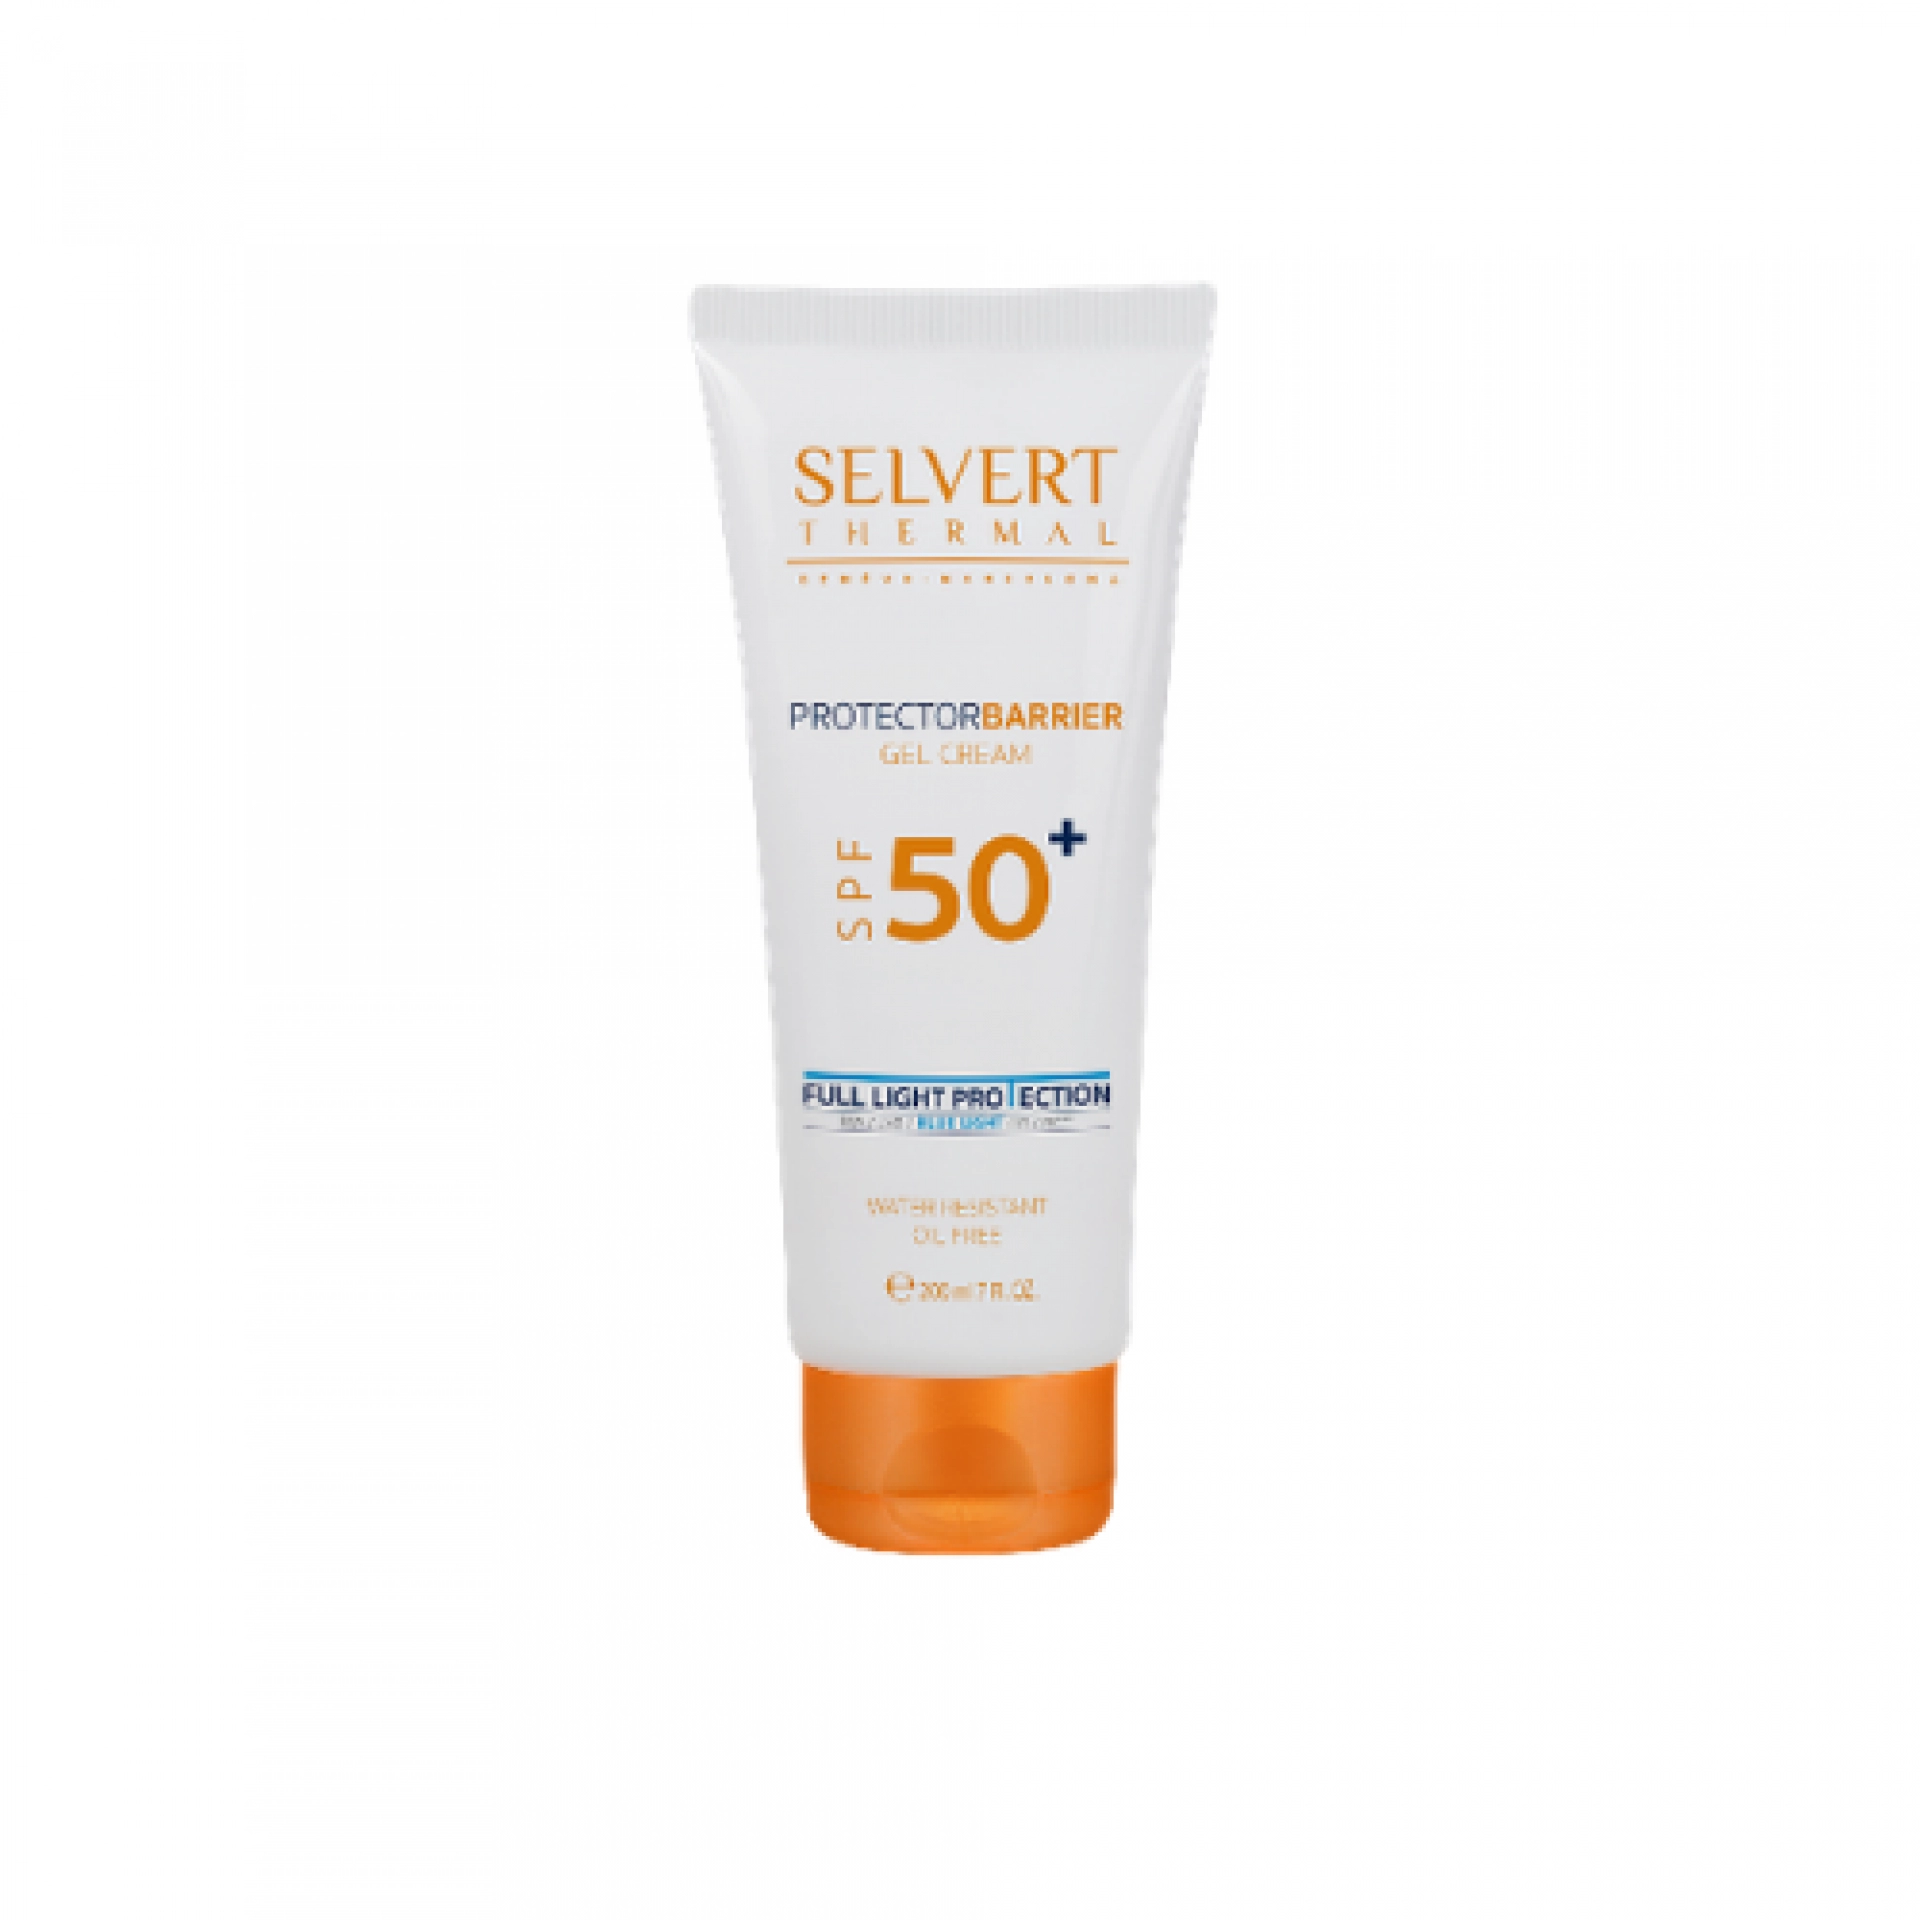 Protector Barrier Gel Cream | Crema solar 200ml - Selvert Thermal ®